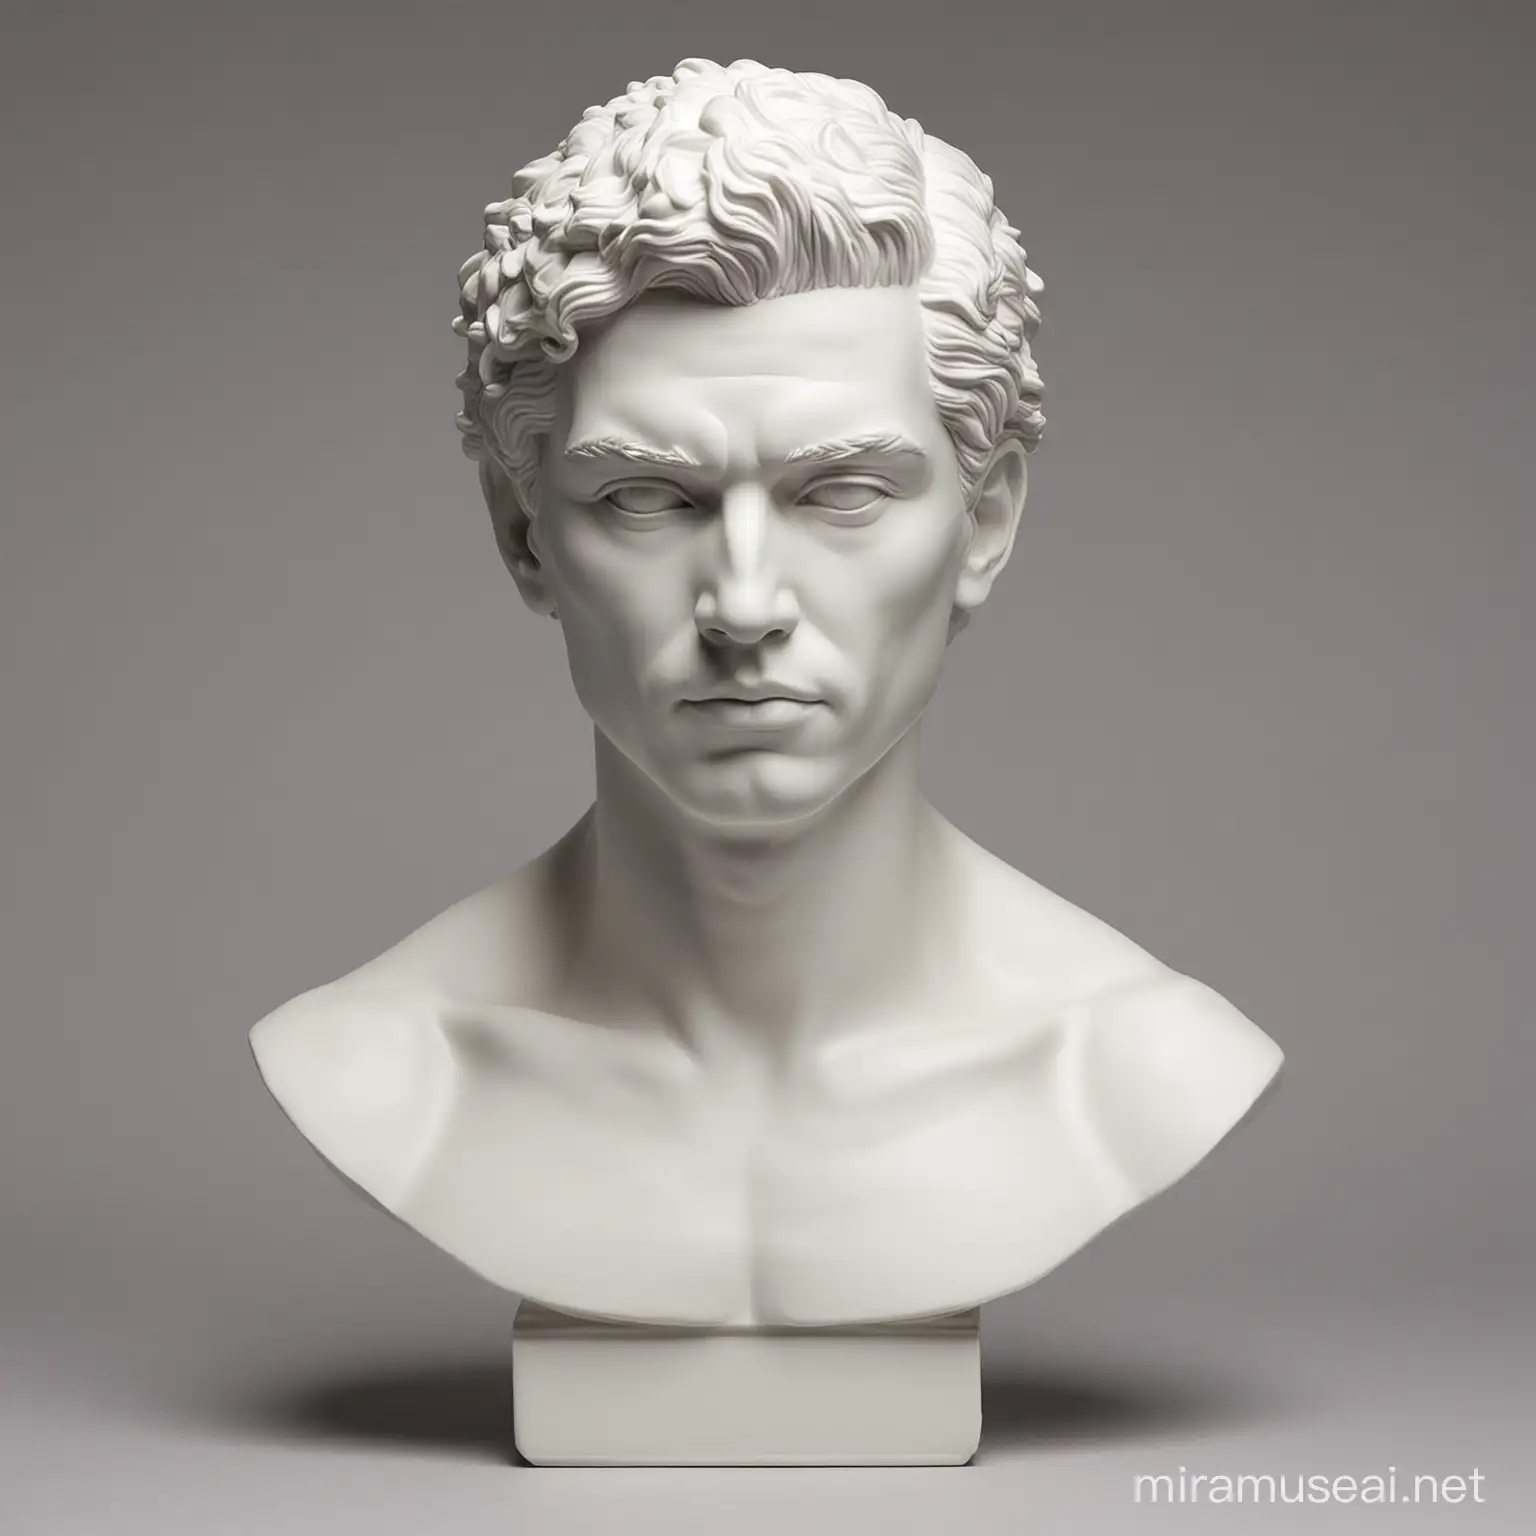 Elegant White Porcelain Male Bust Sculpture